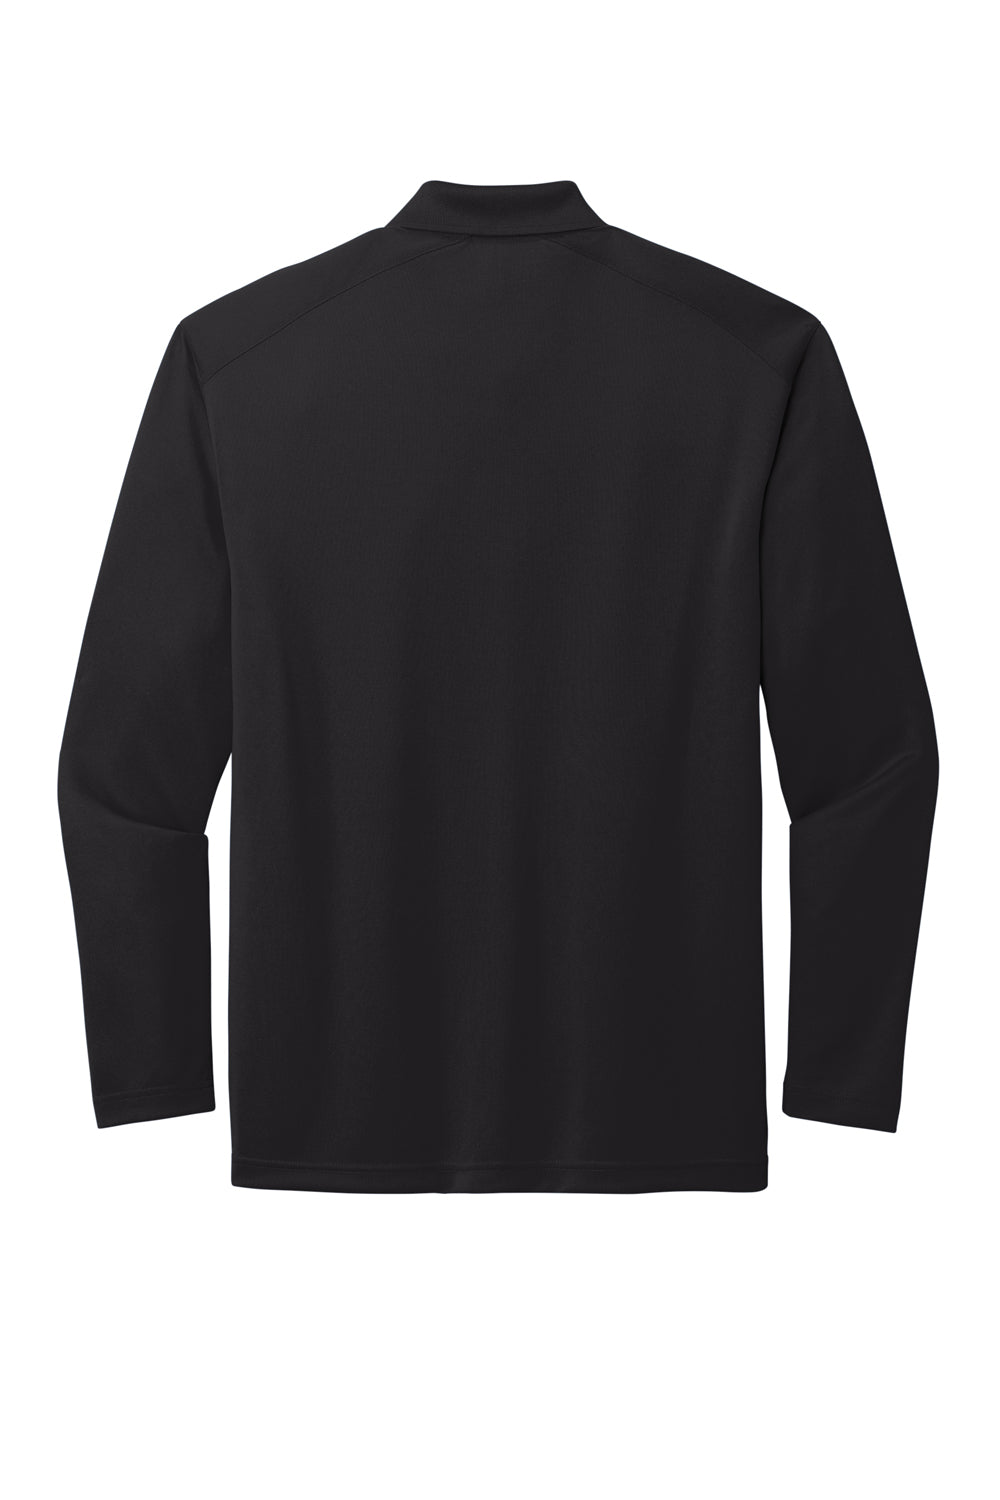 CornerStone CS418LS Select Long Sleeve Polo Shirt Black Flat Back